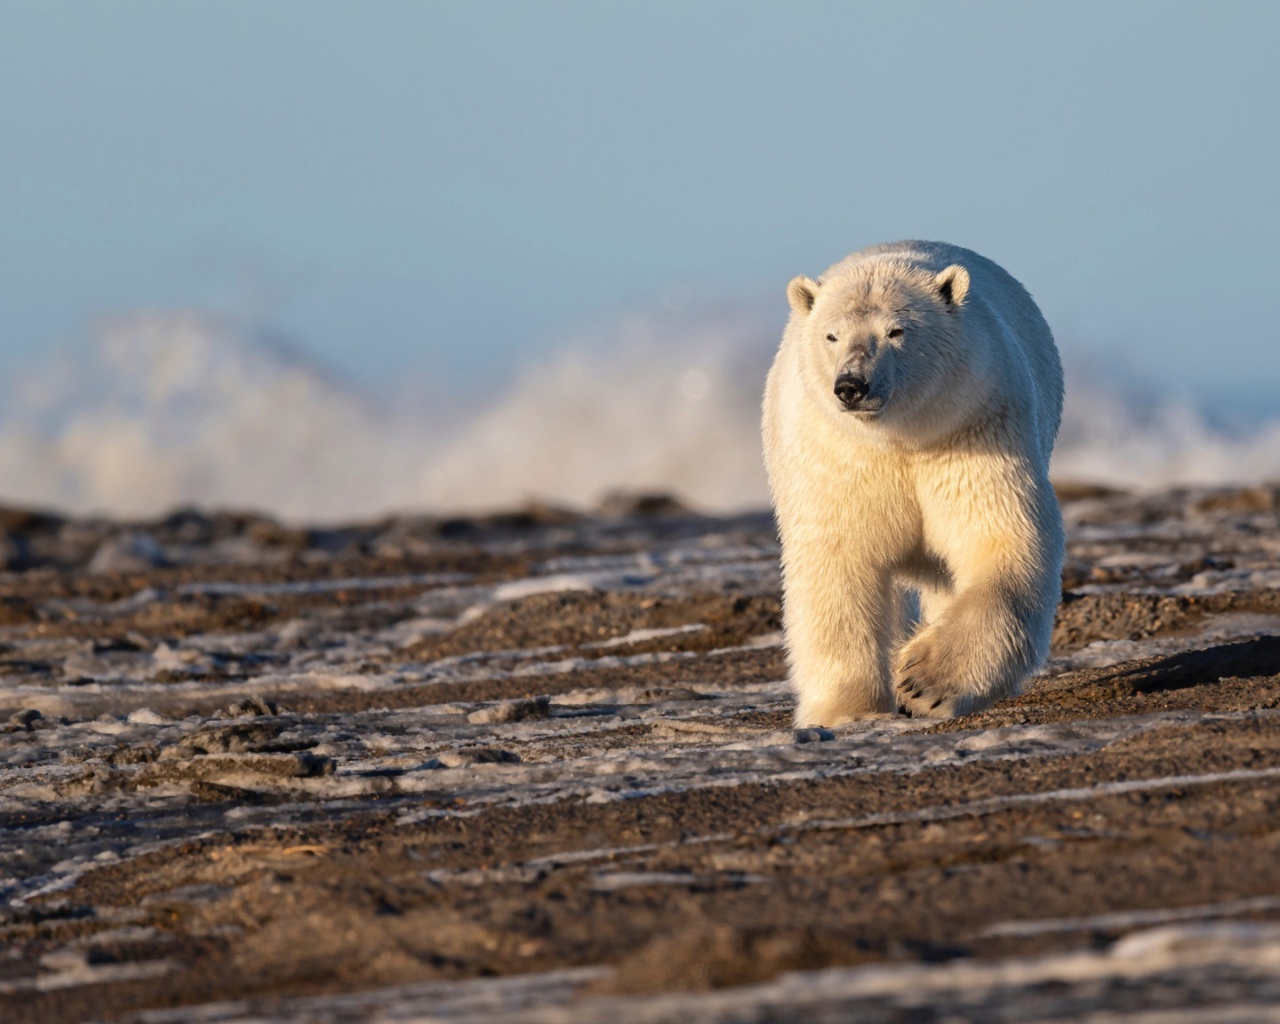 Big polar bear walking in the sand